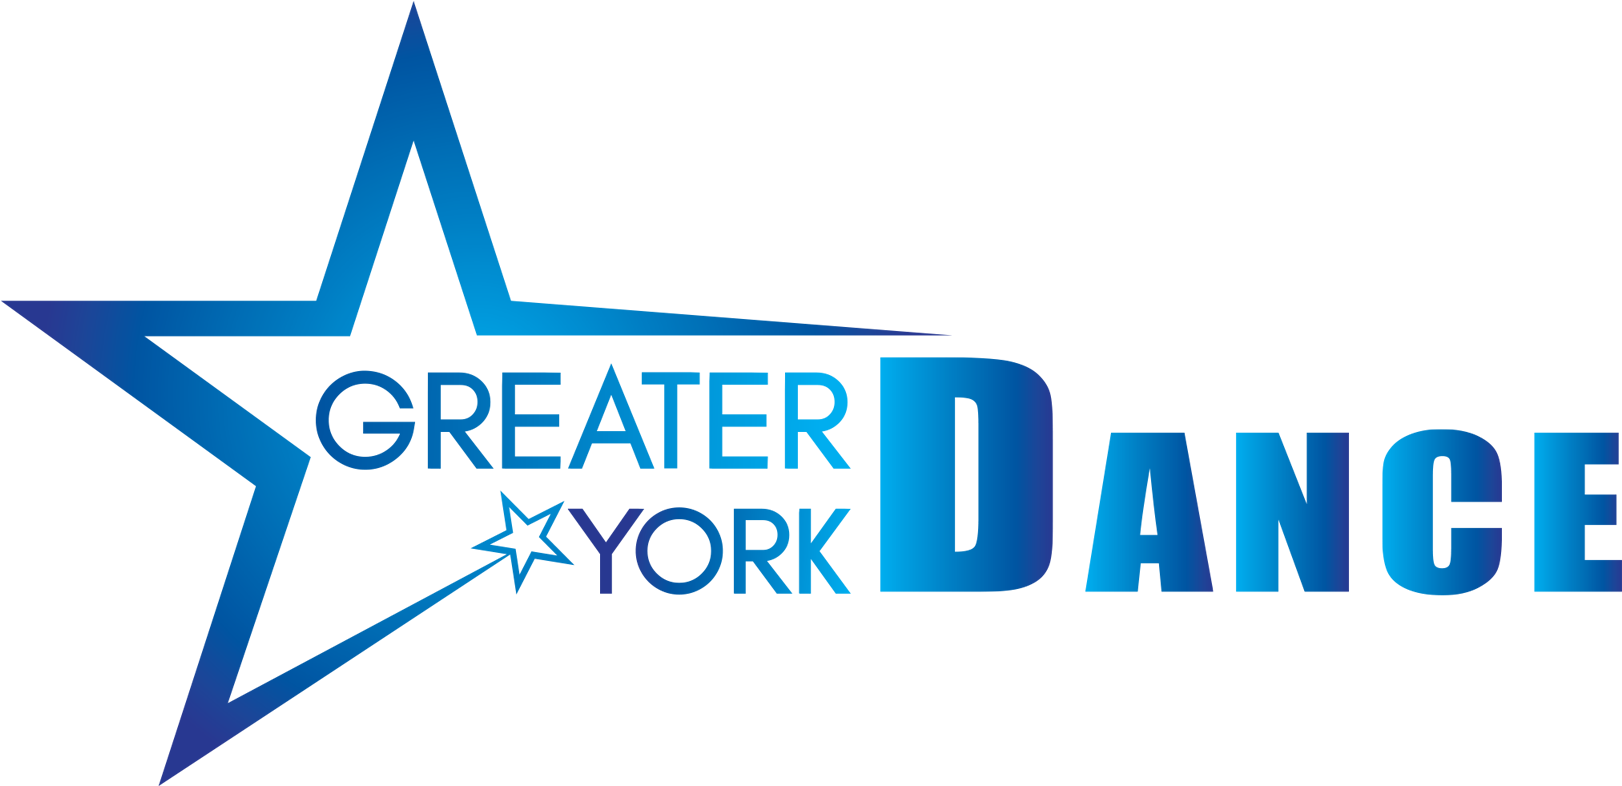 Greater York Dance Logo PNG image